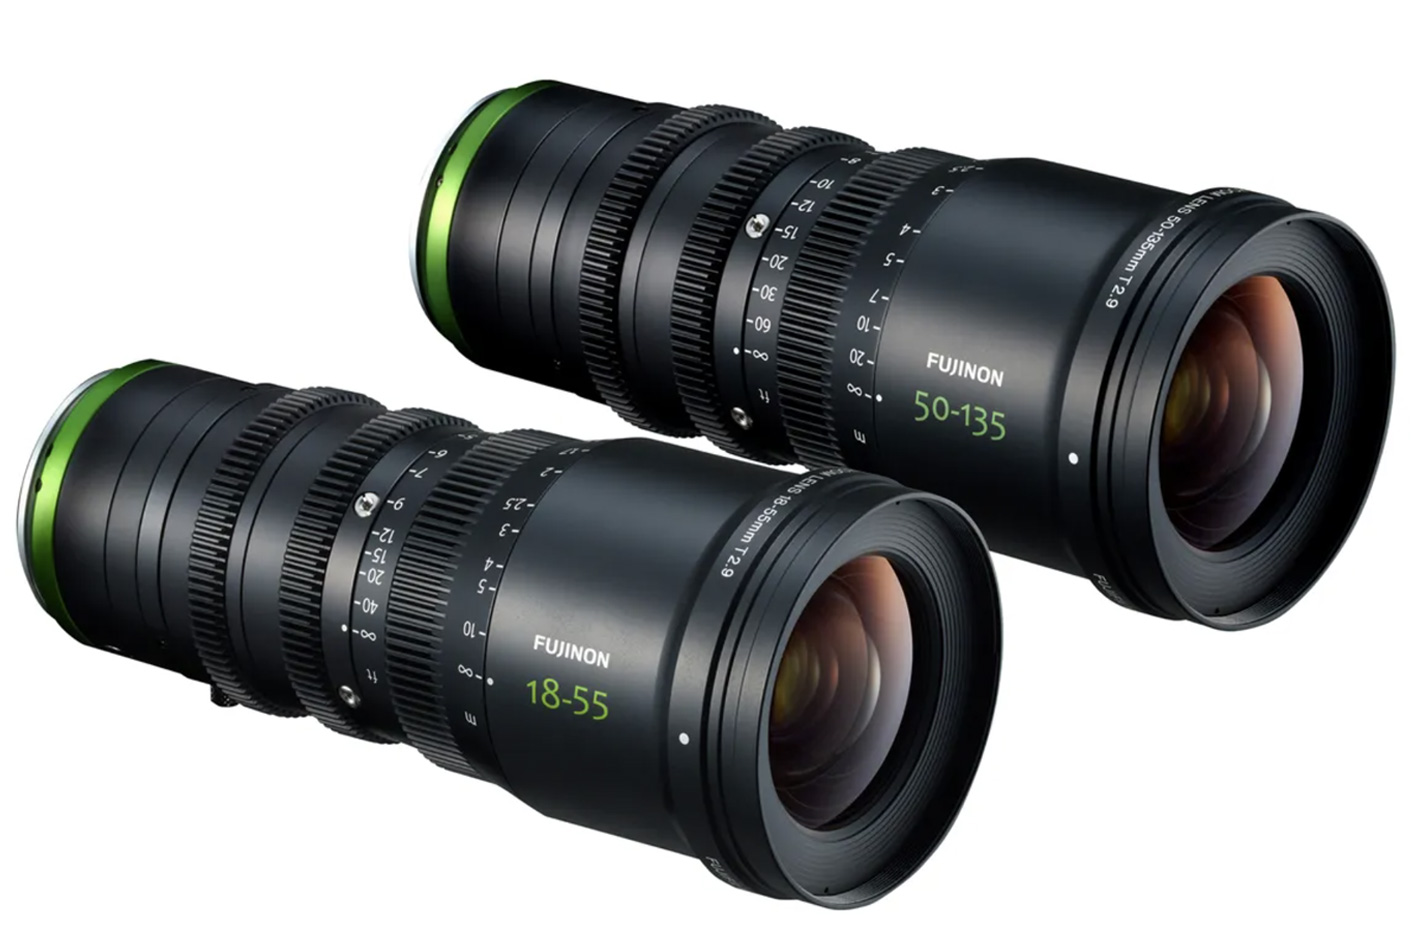 Cine Gear Expo 2022: Fujifilm’s new cameras and lenses